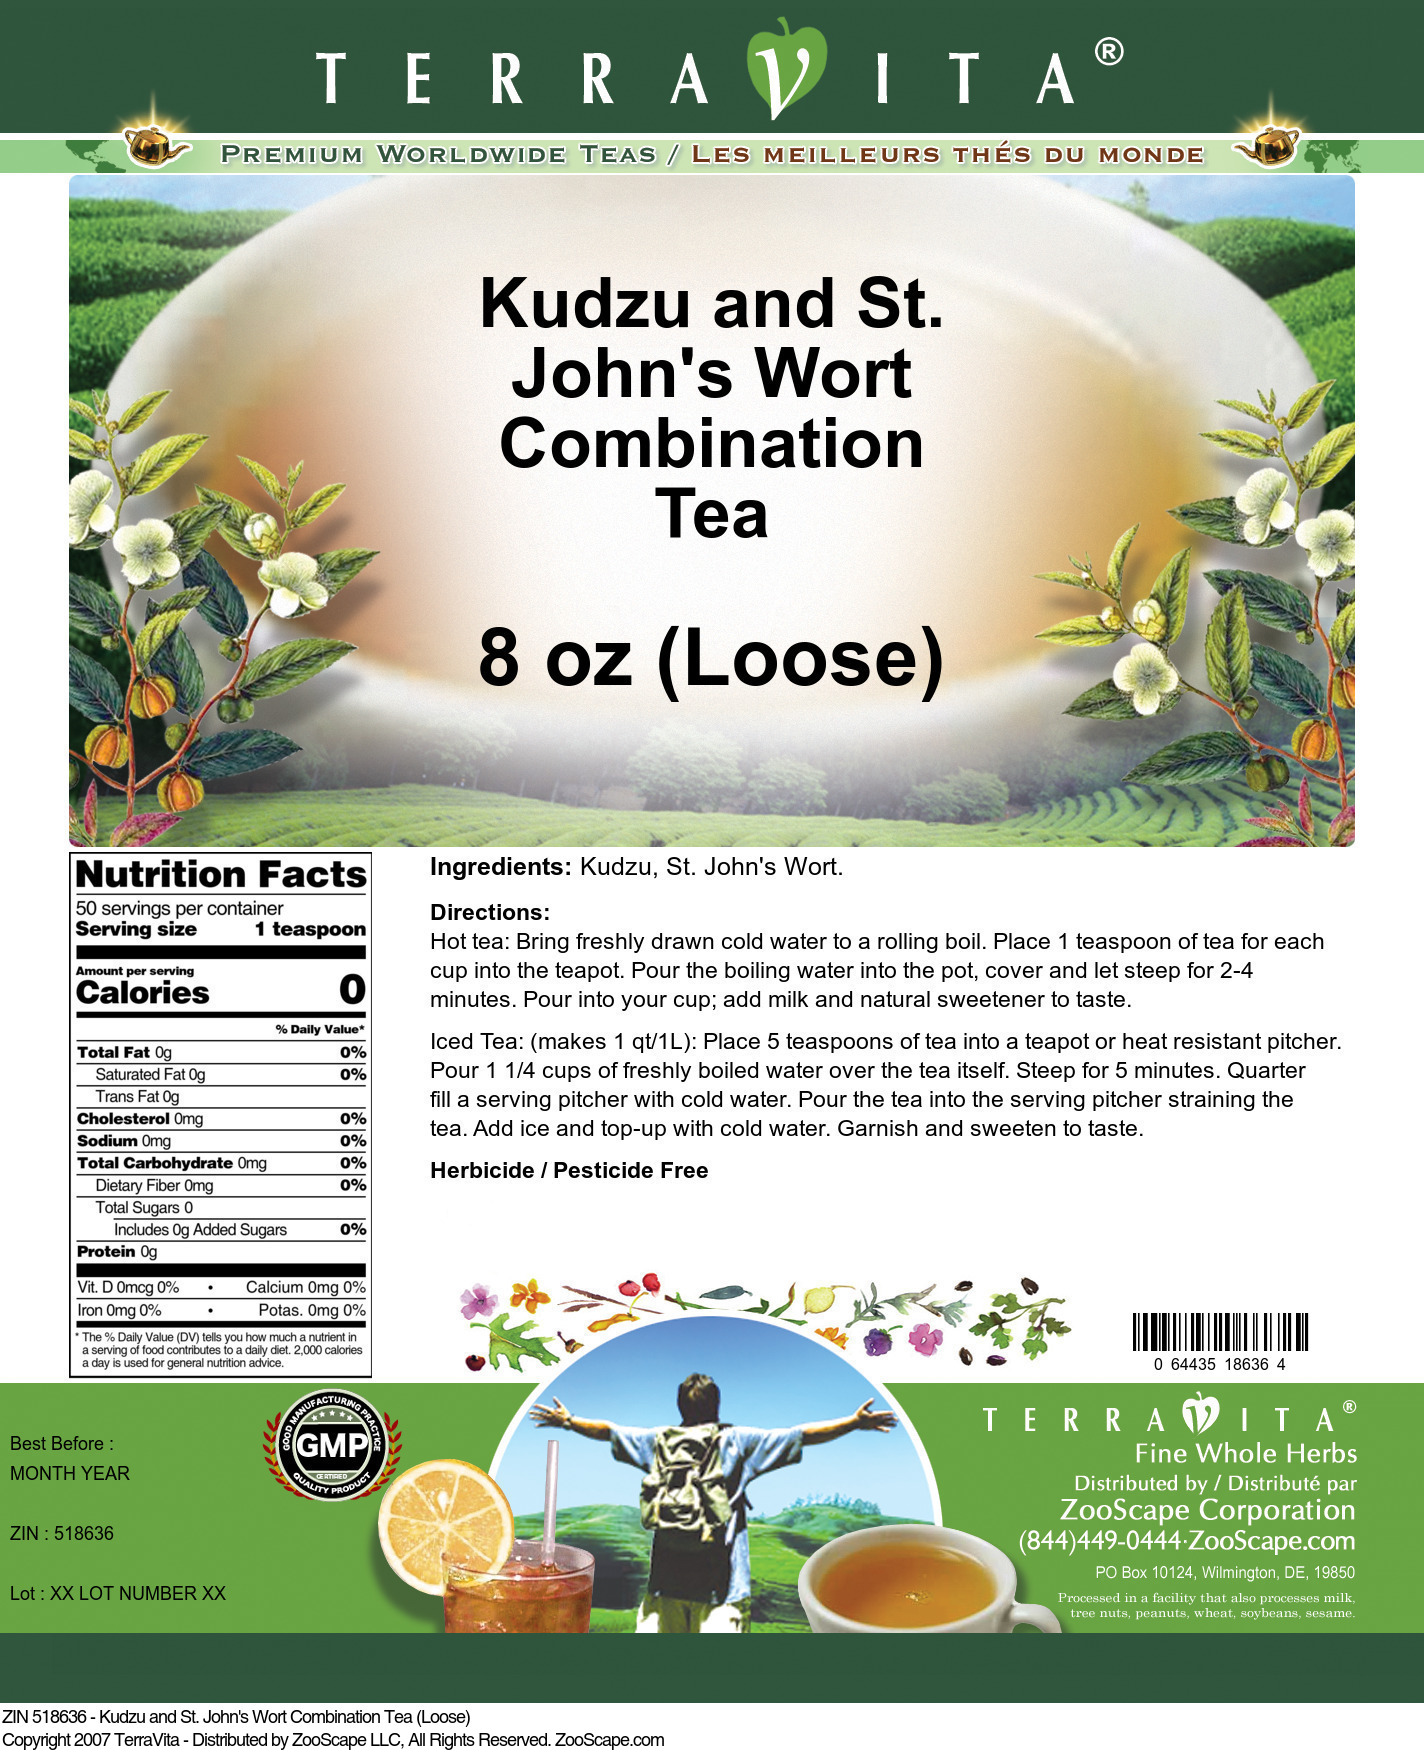 Kudzu and St. John's Wort Combination Tea (Loose) - Label